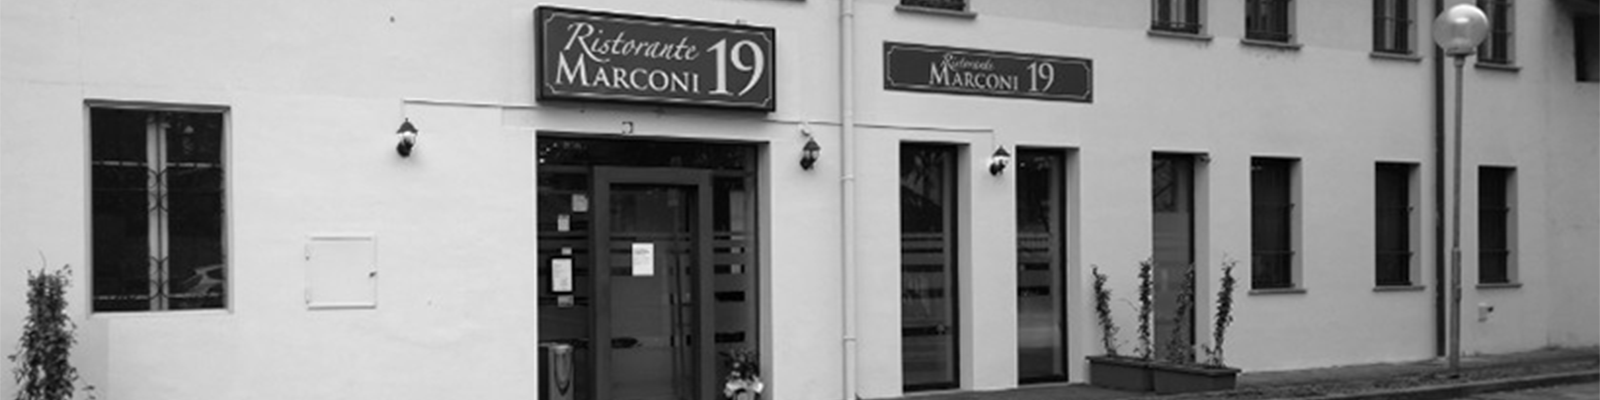 Ristorante Marconi19 ingresso